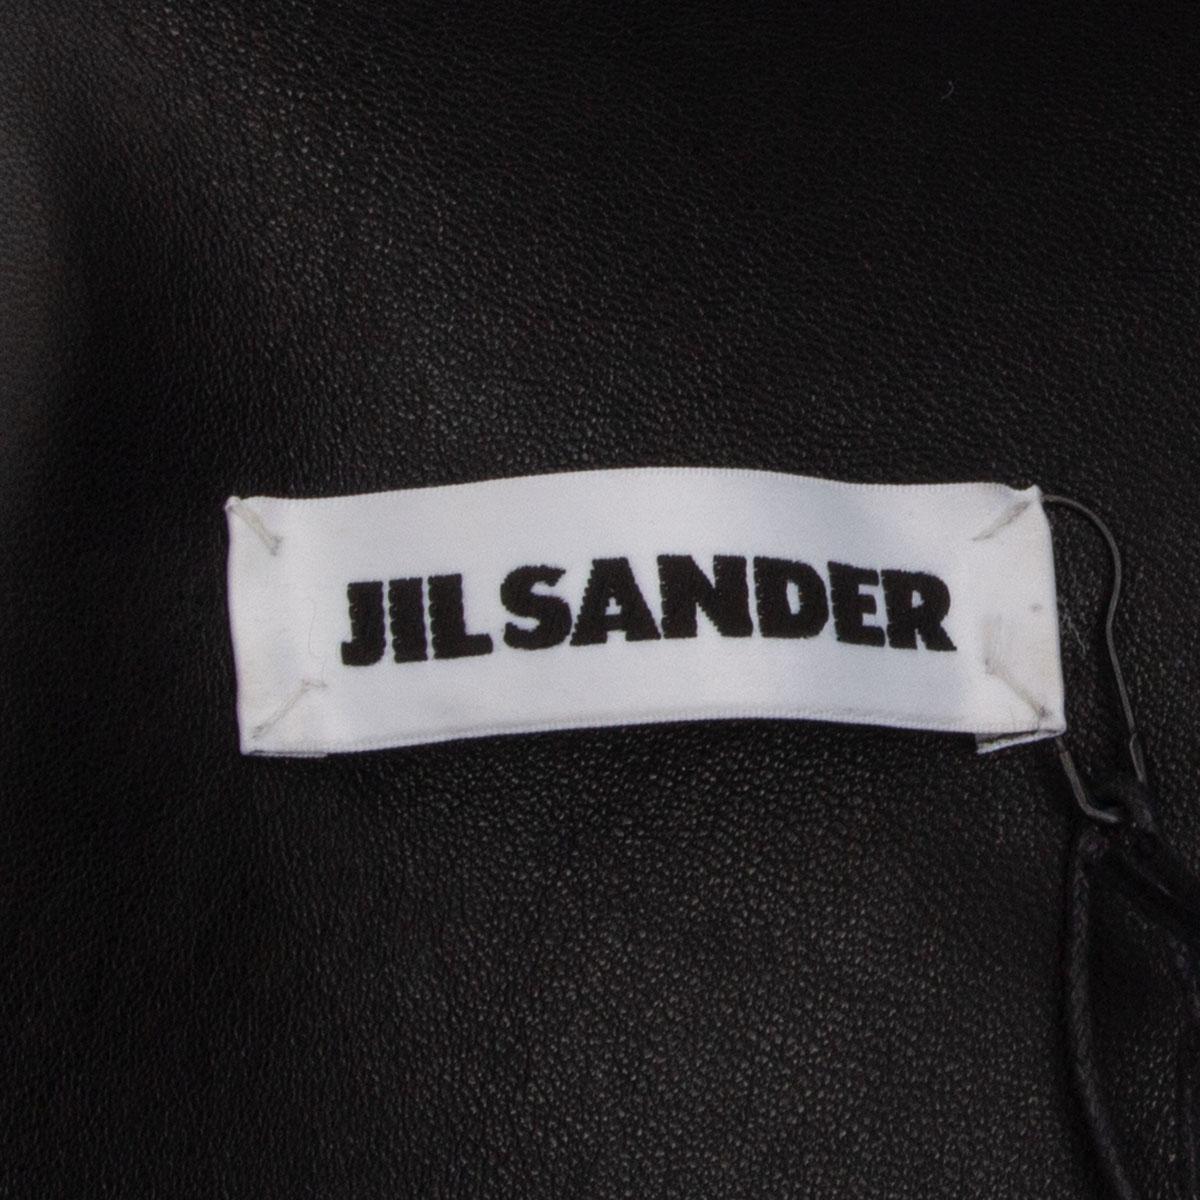 JIL SANDER black PORTICO LEATHER-LINED FUR Coat Jacket L In Excellent Condition For Sale In Zürich, CH